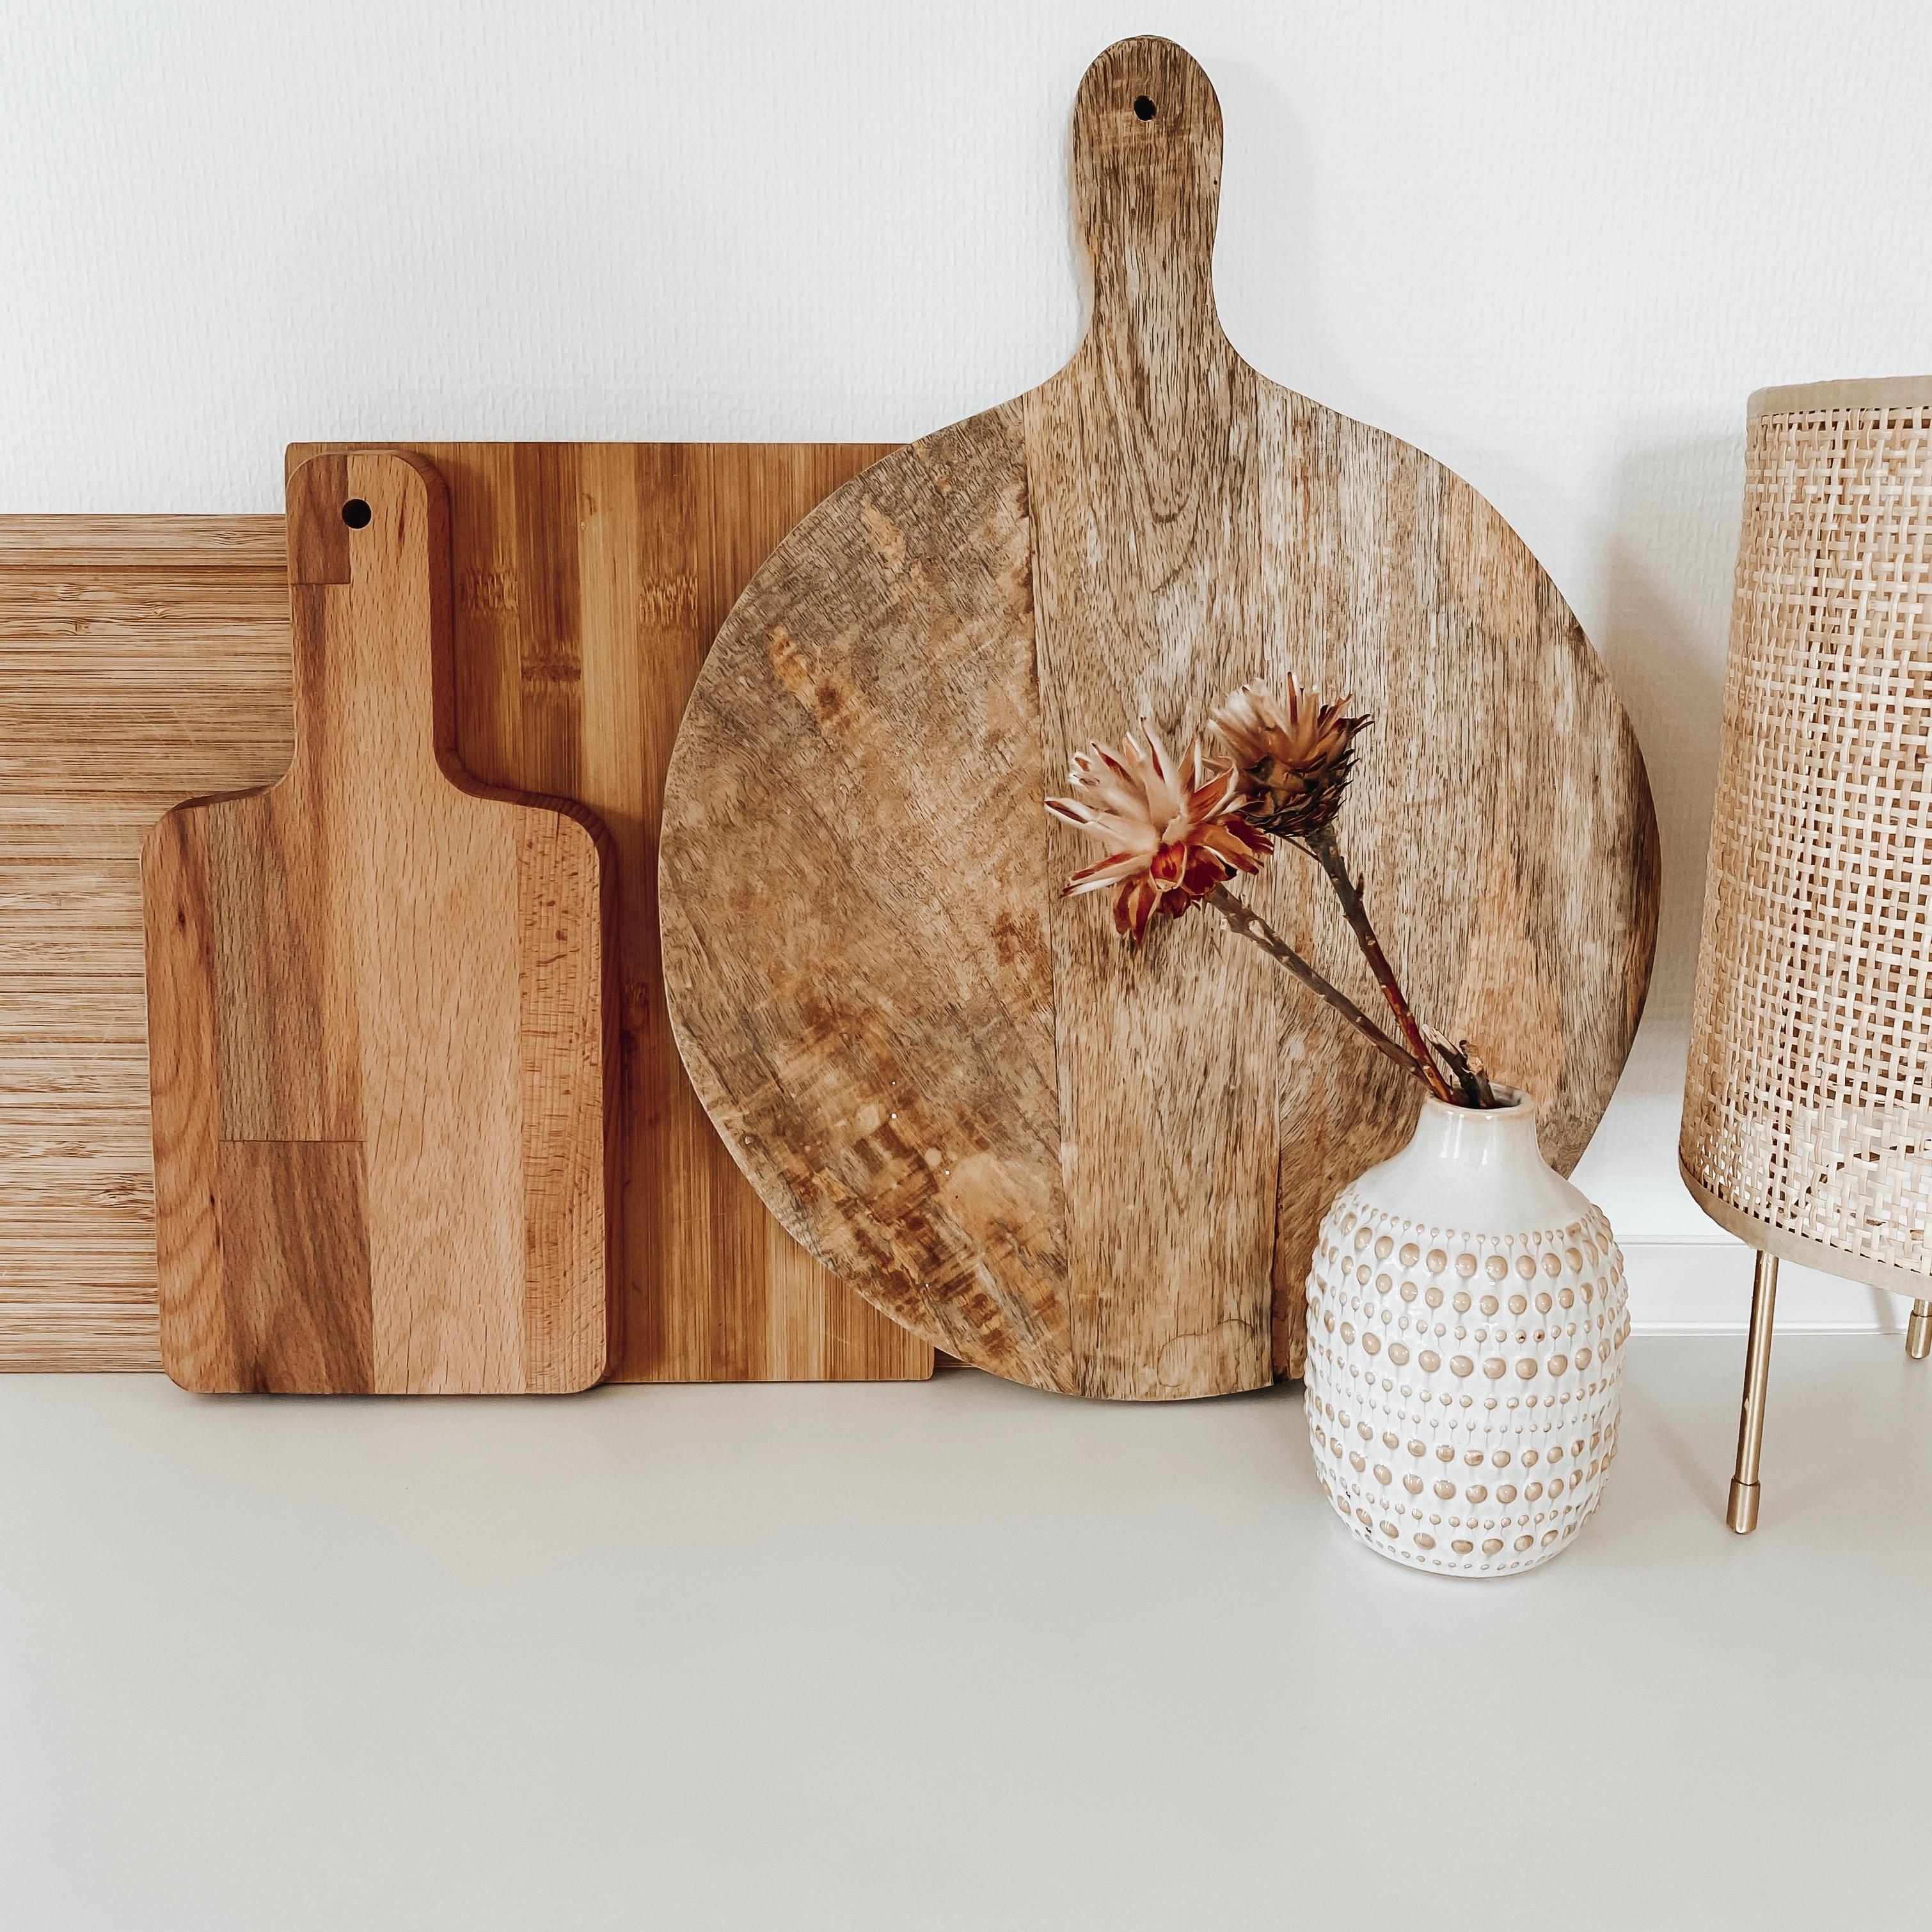 #küche #kitchen #details #wooden #holzbrett #vase #vasenliebe #boho